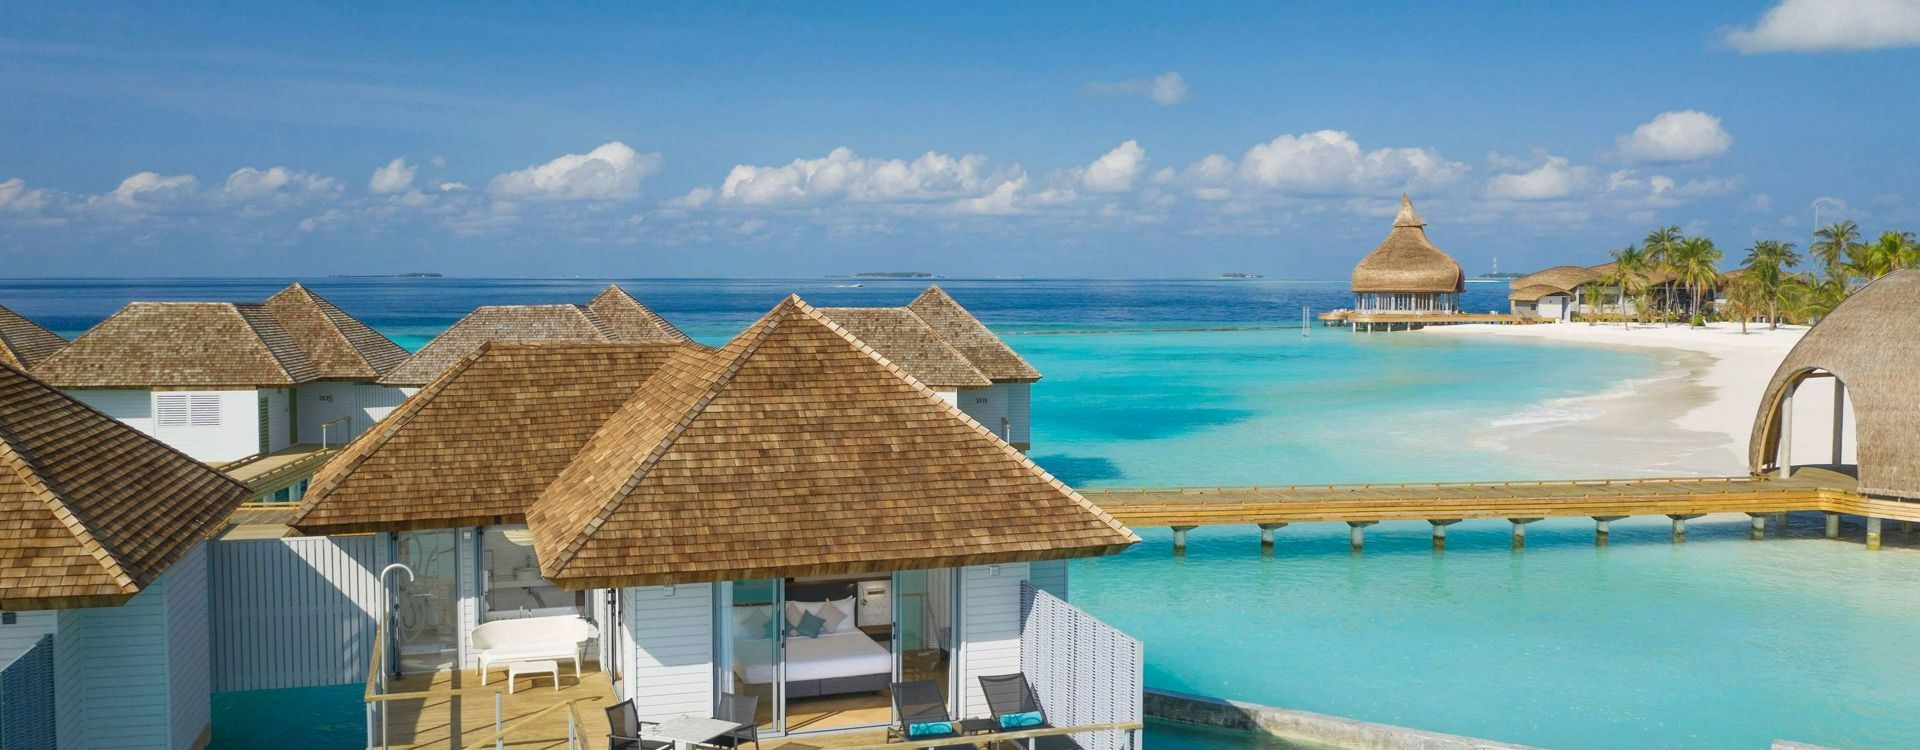 Outrigger Maafushivaru Maldives Resort-Miscellaneous (1).jpg